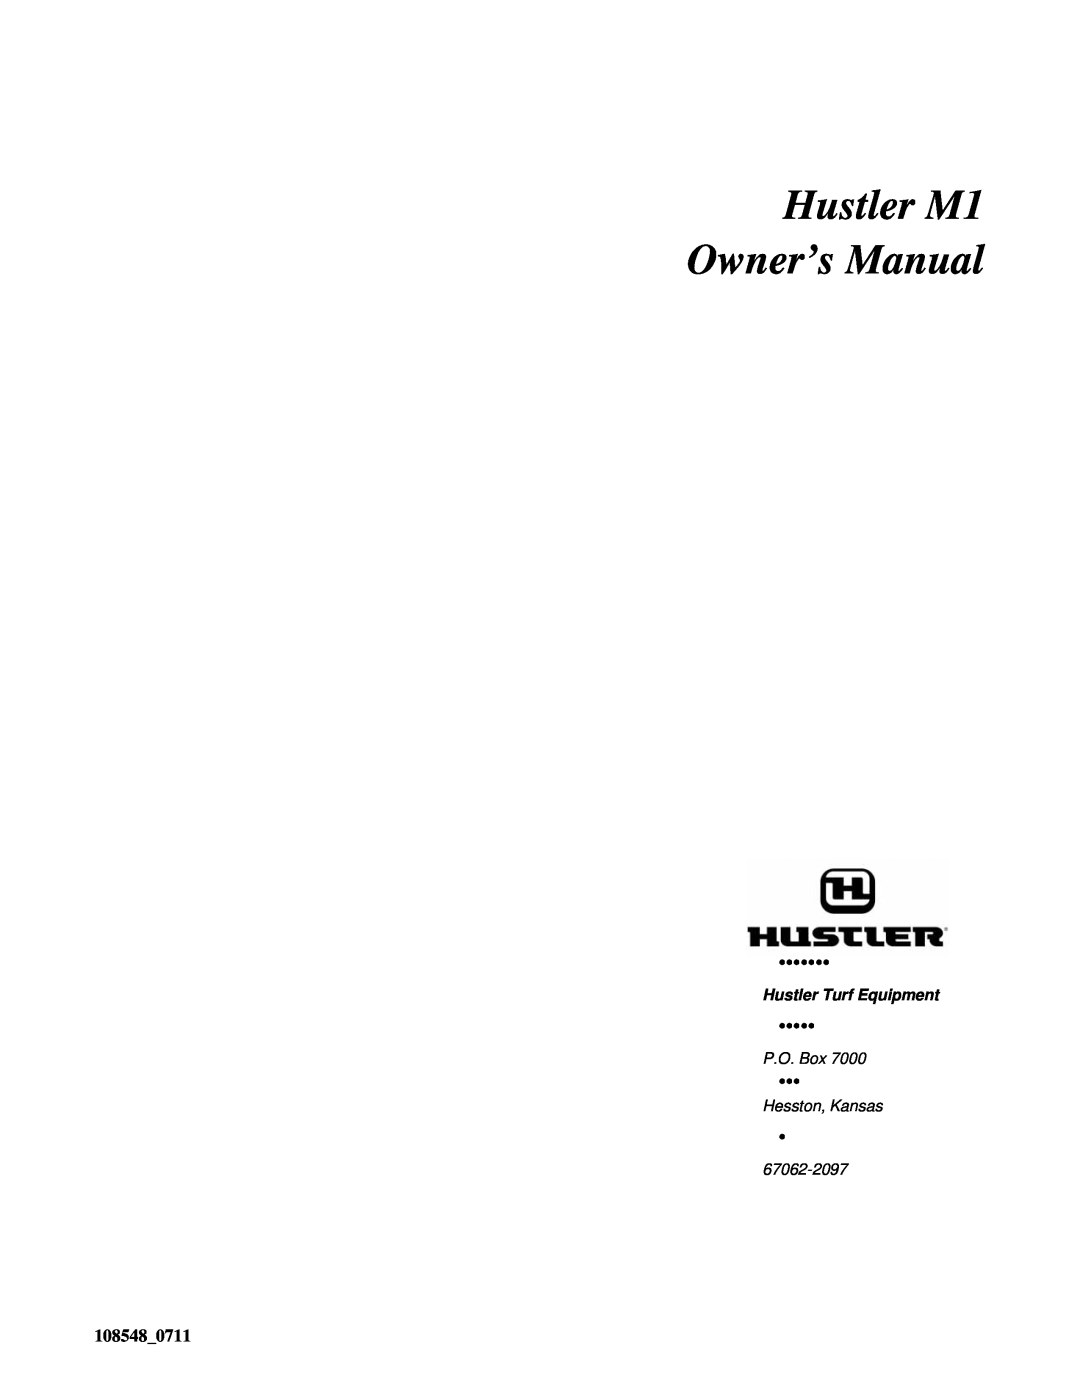 Hustler Turf M1 owner manual 108548, Hustler Turf Equipment, P.O. Box, Hesston, Kansas, 67062-2097 